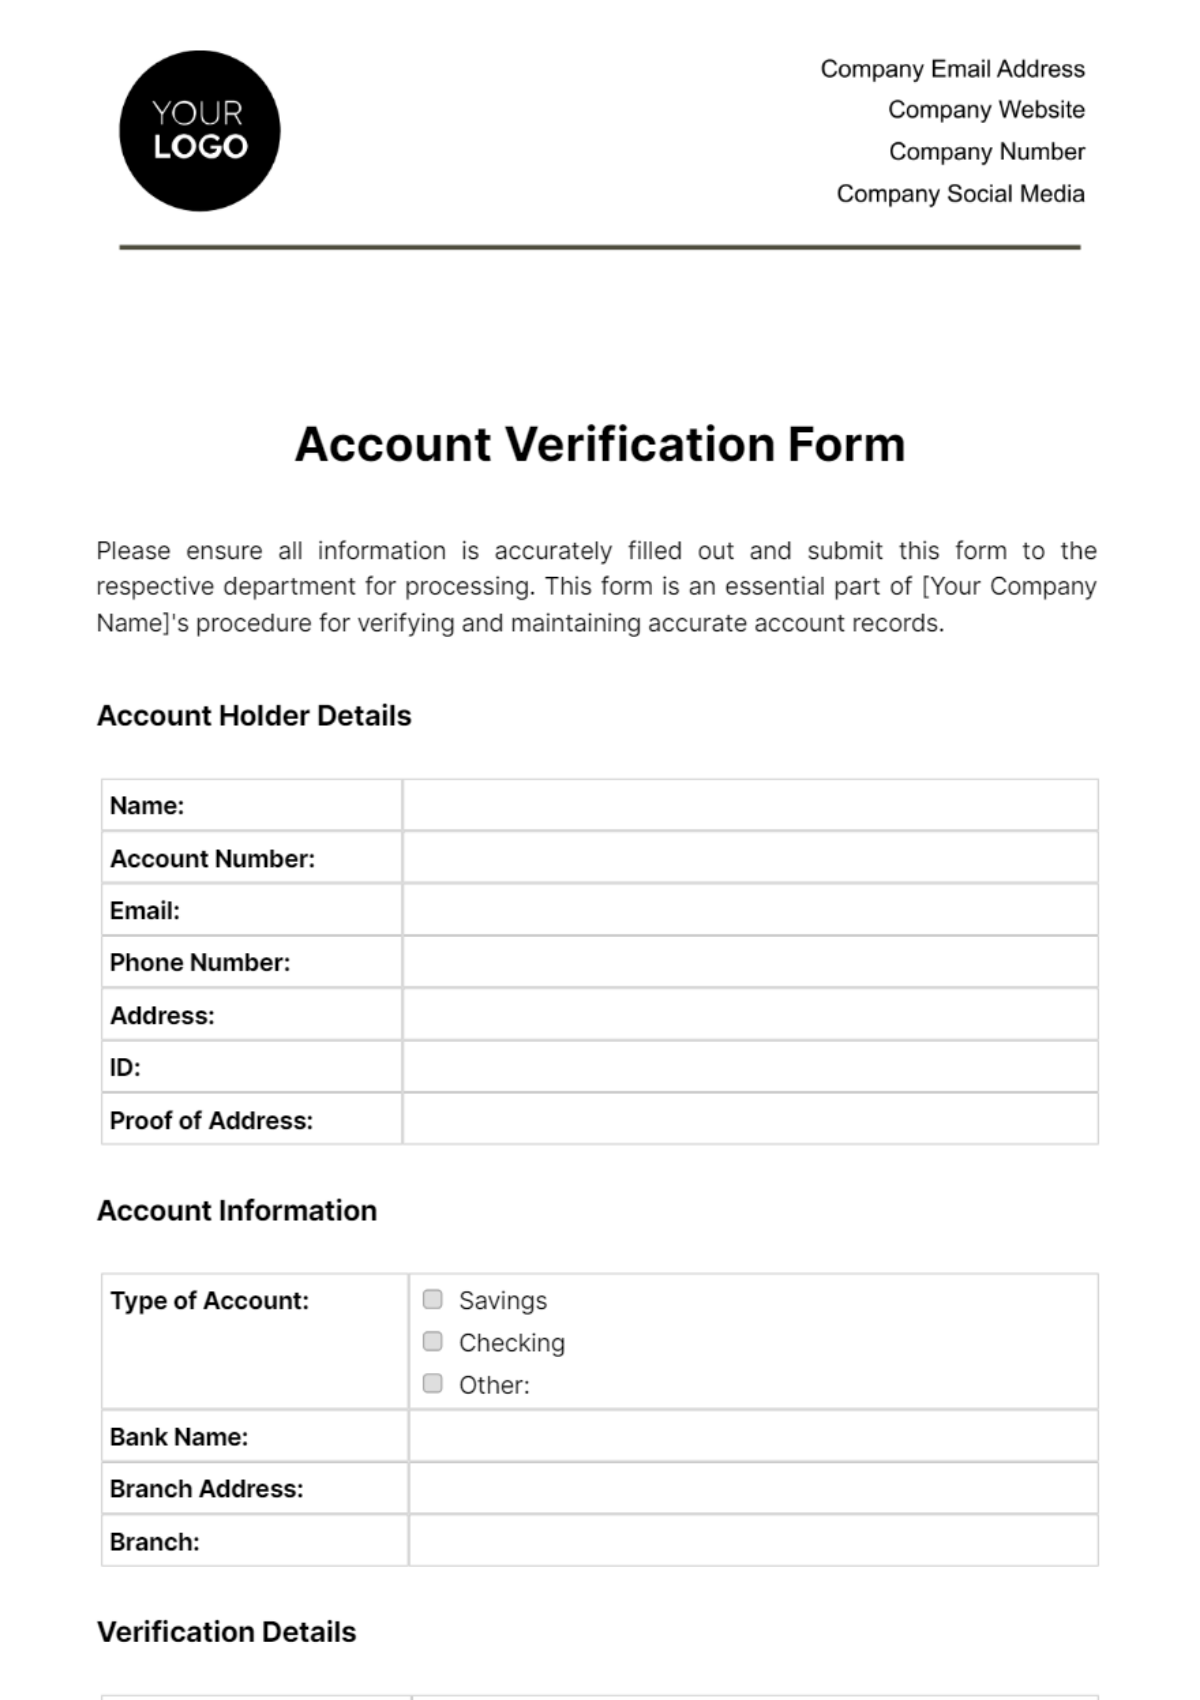 Account Verification Form Template